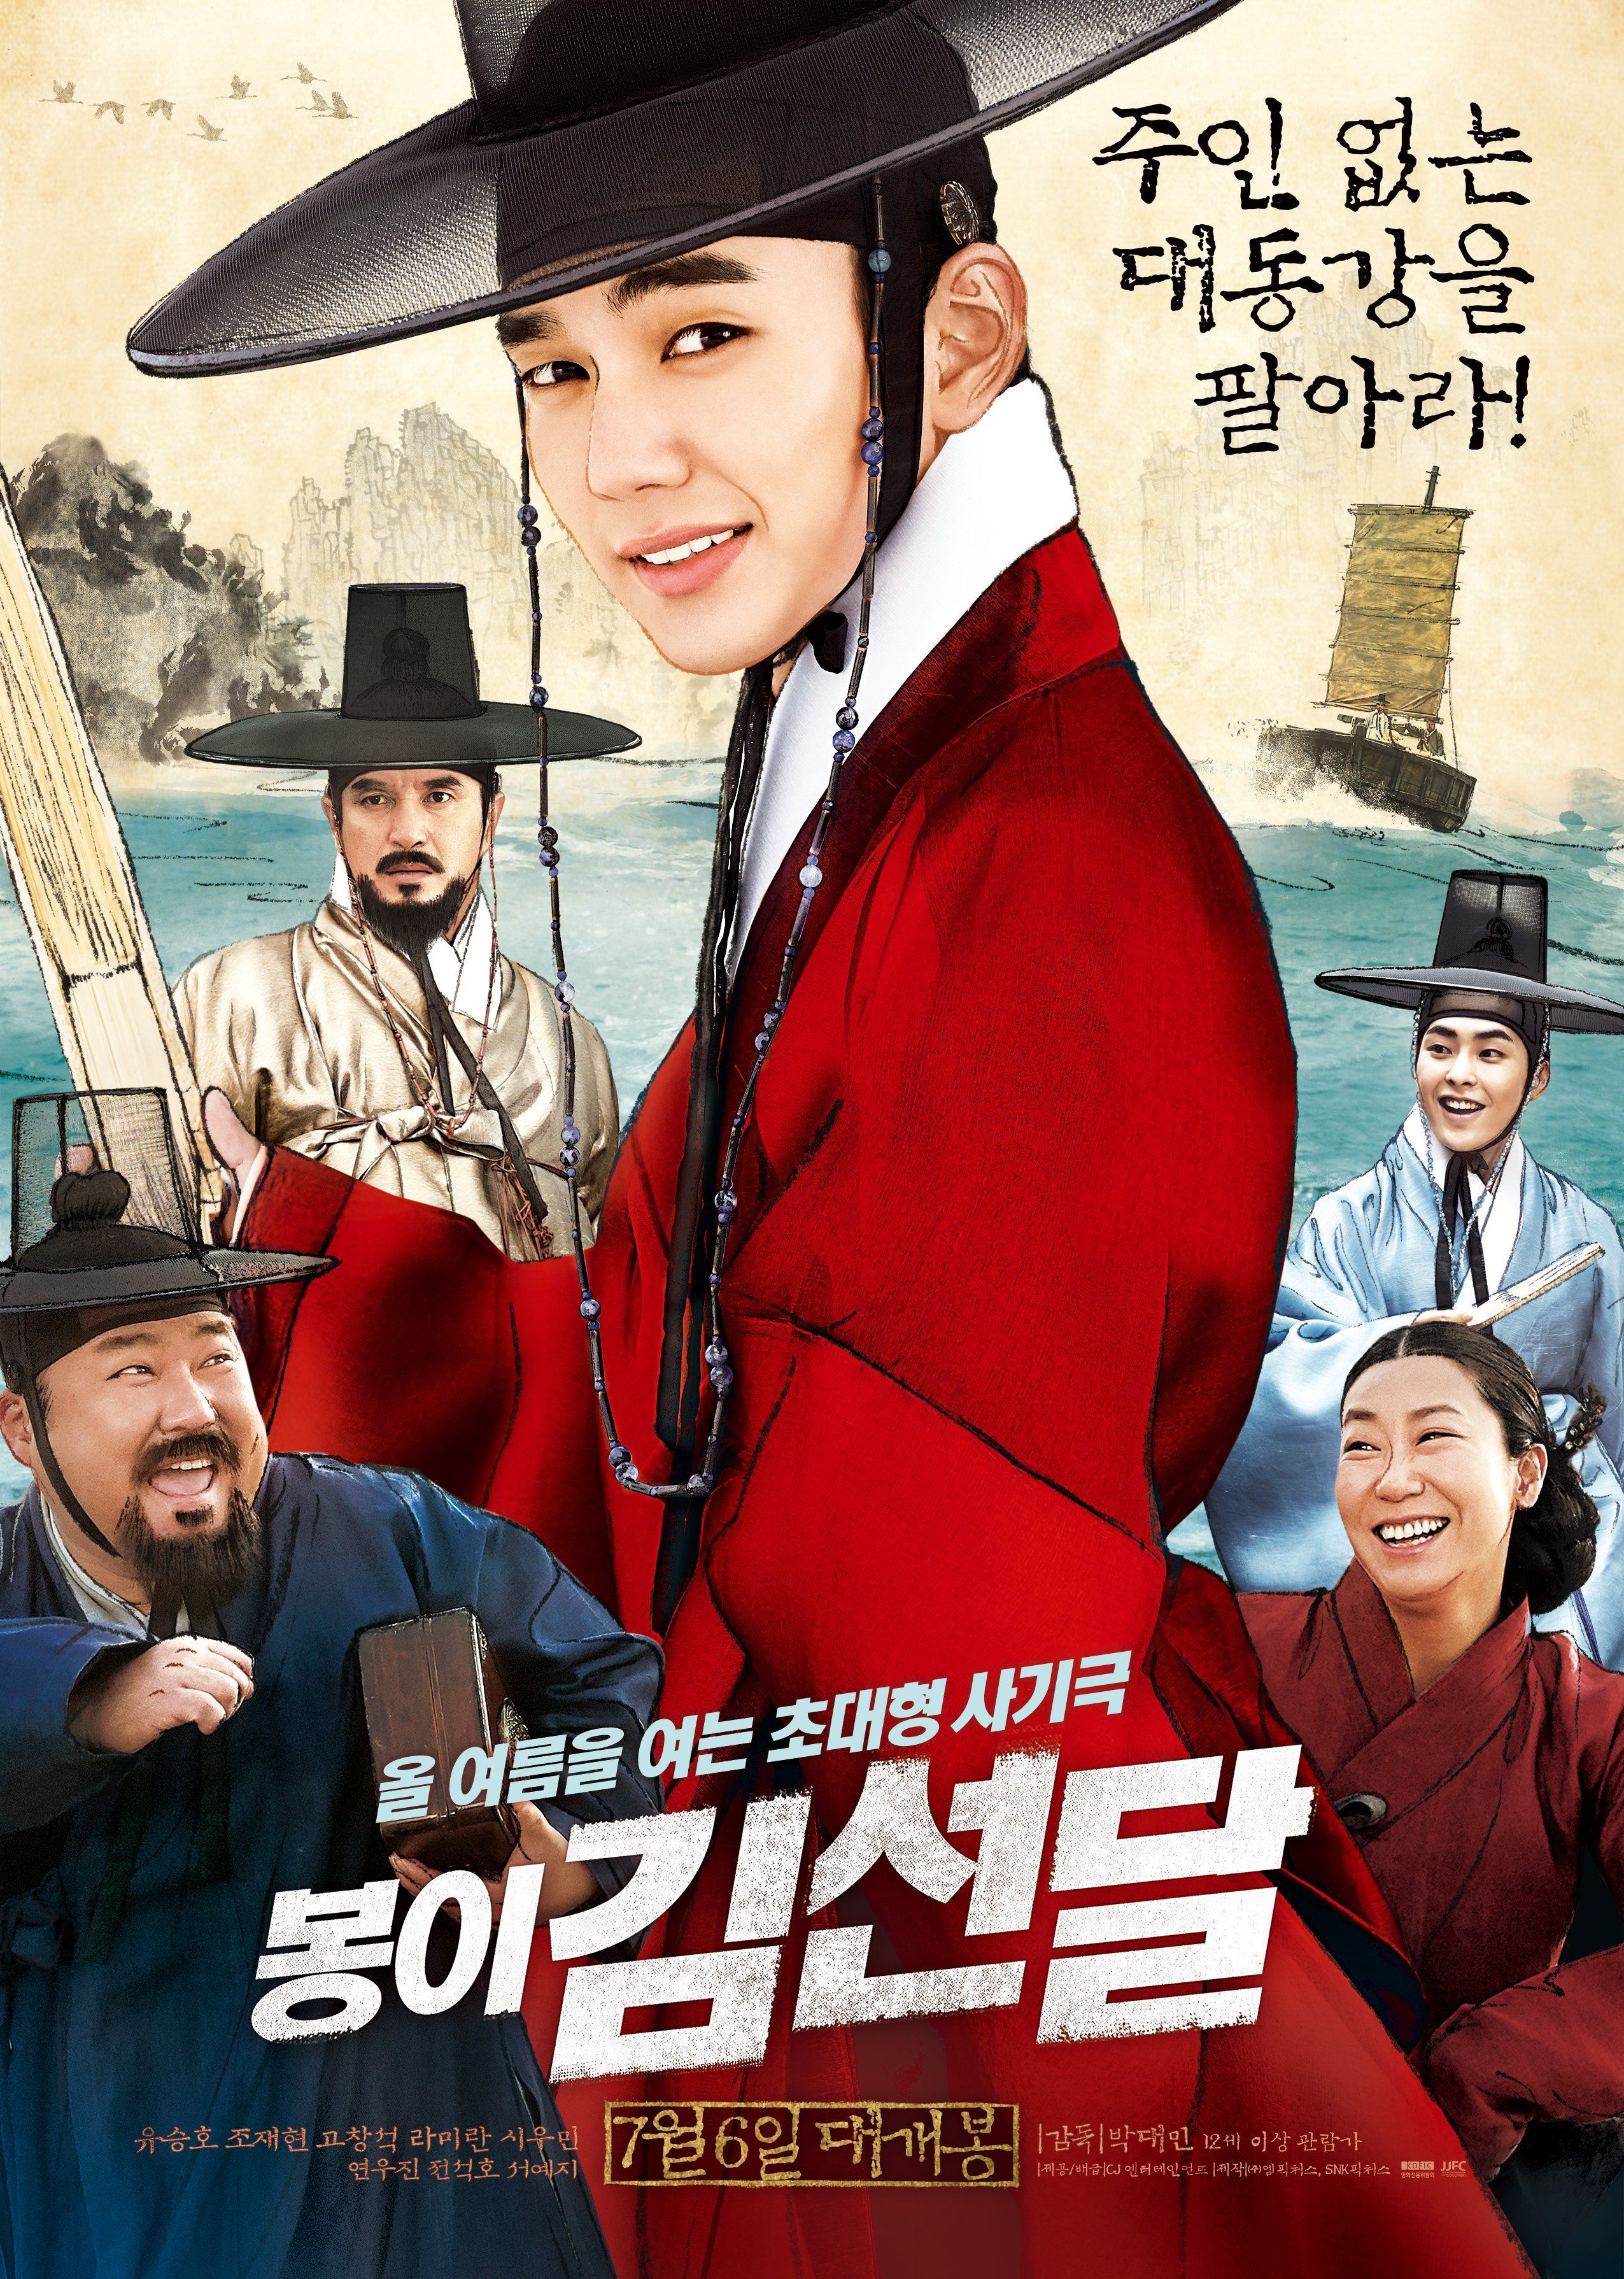 Streaming Drama Korea Jewel In The Palace Subtitle Indonesia - lasopawizard